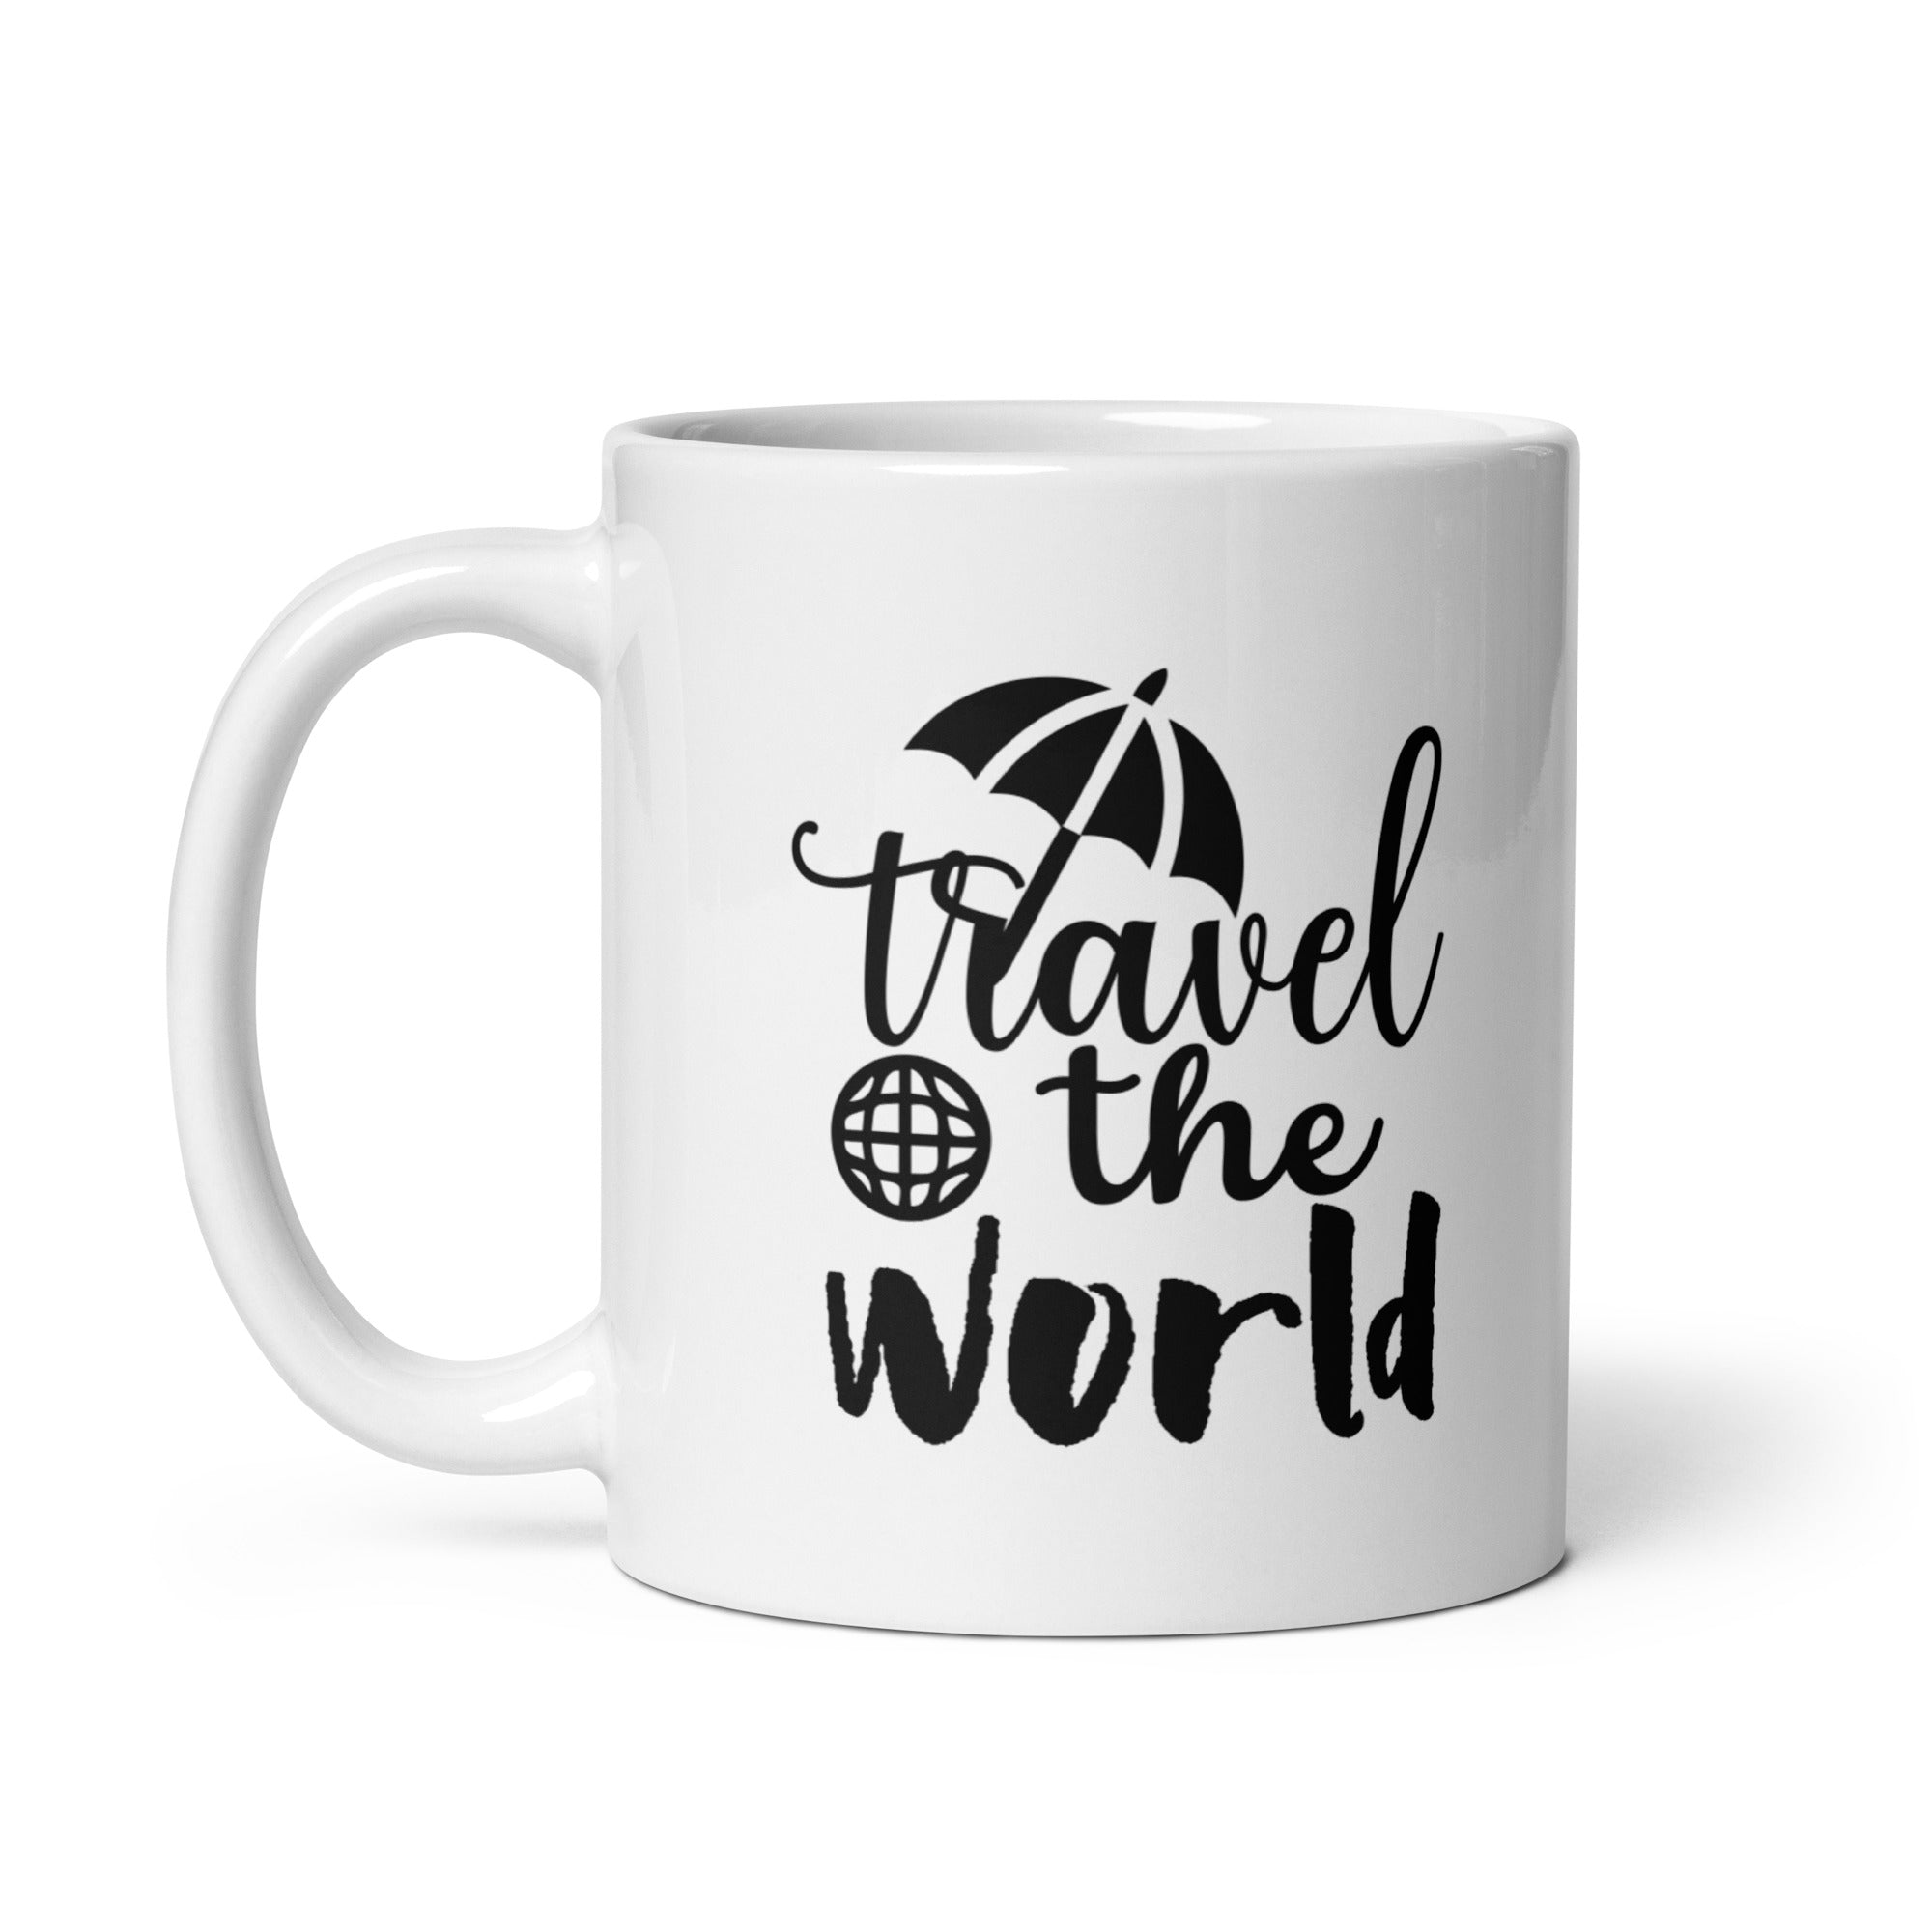 Travel the World - Mug